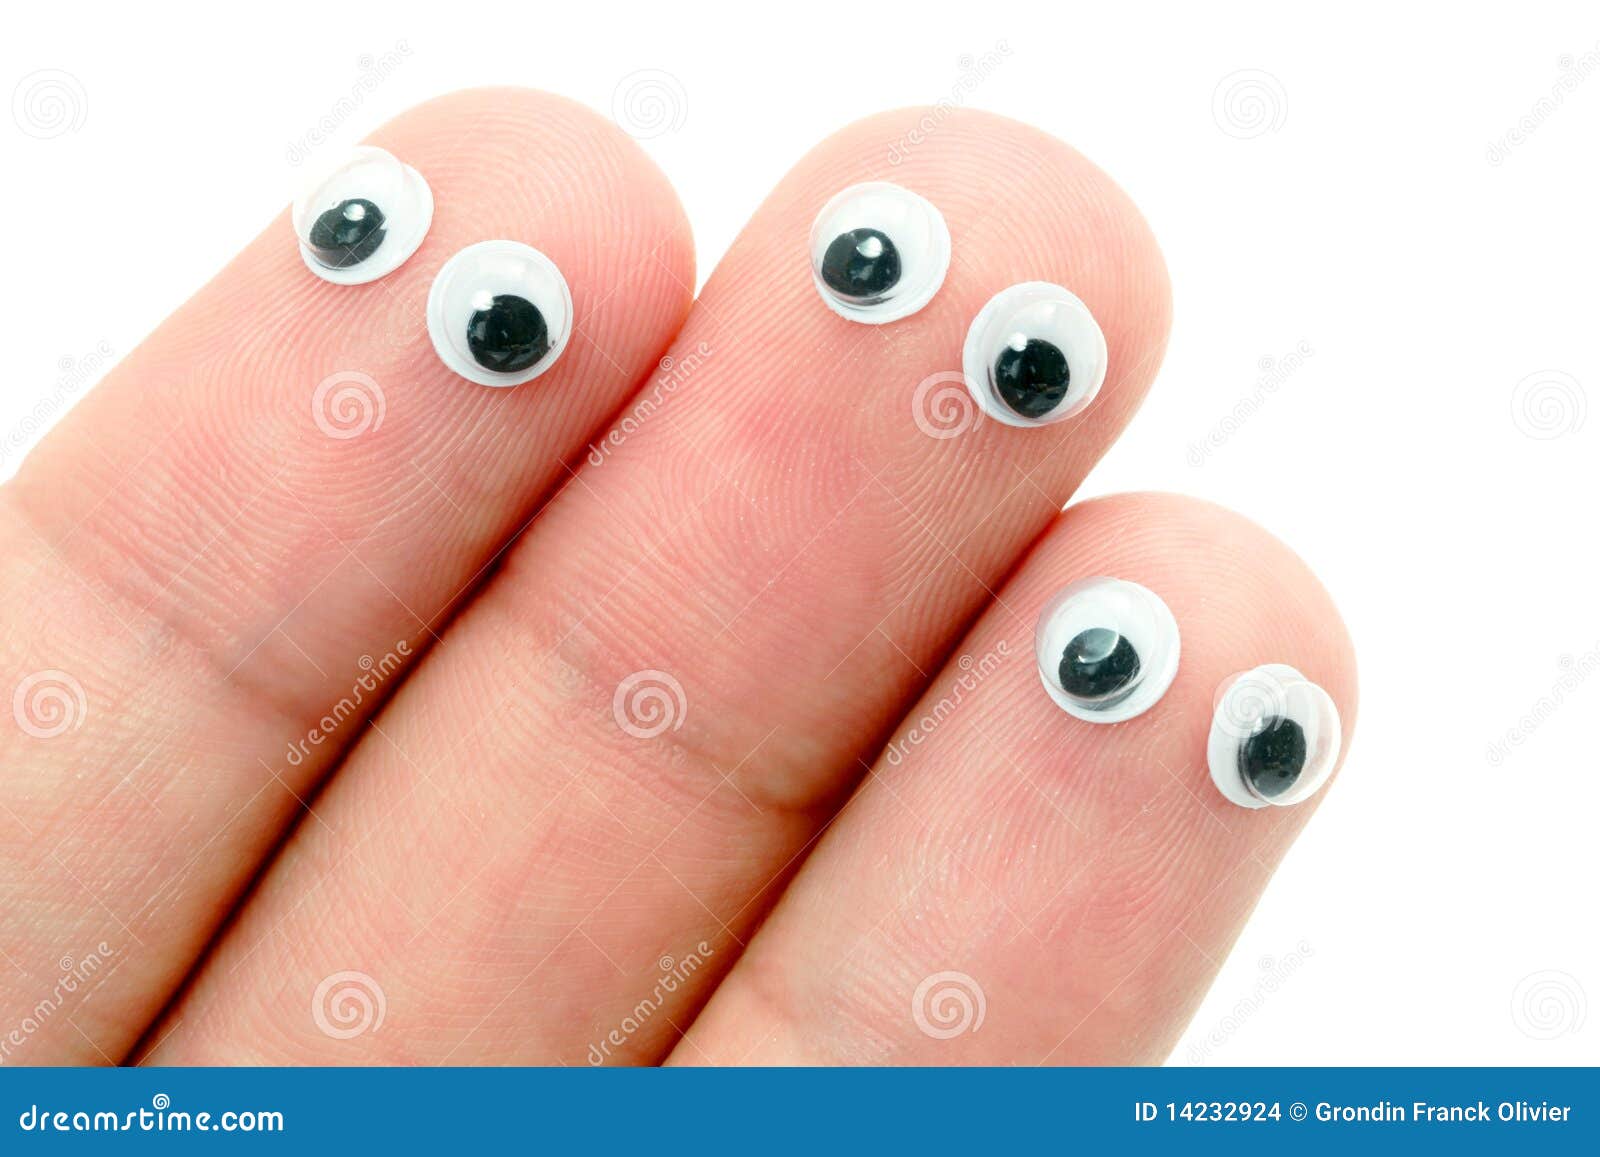 wiggle eyes stuck on fingers